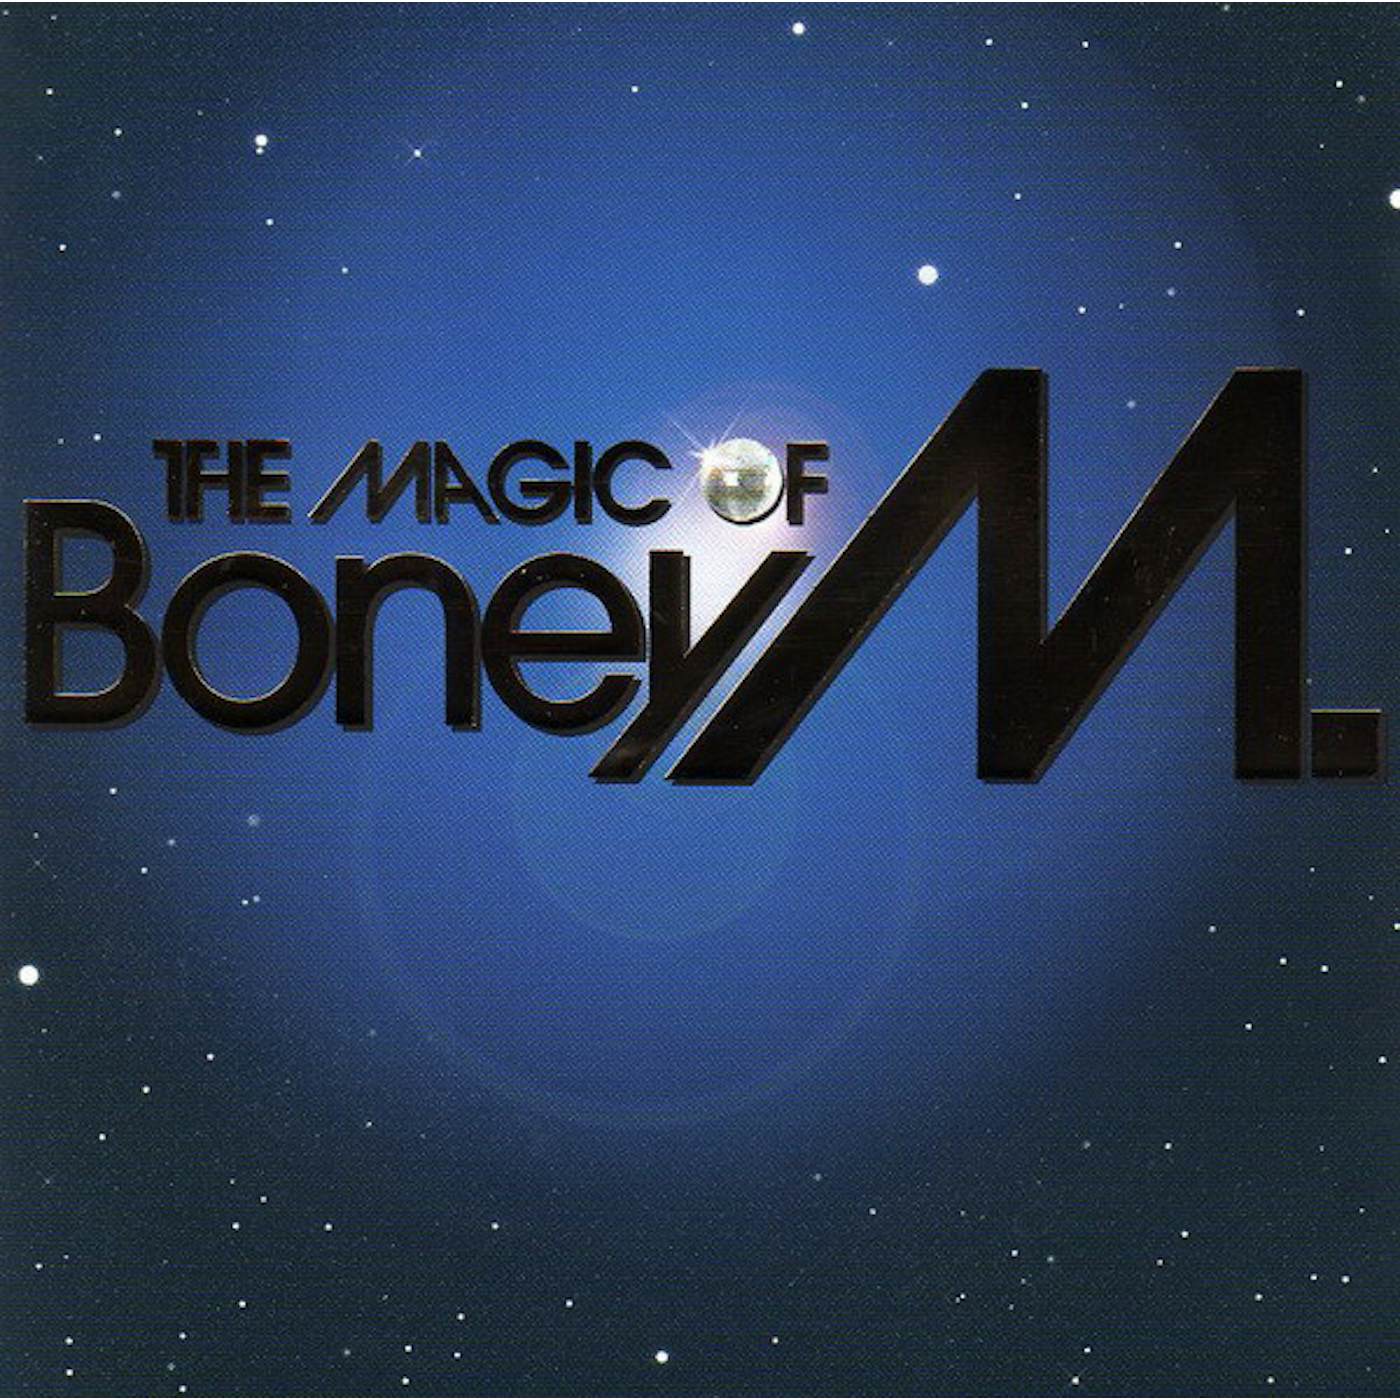 THIS IS: THE MAGIC OF Boney M. CD